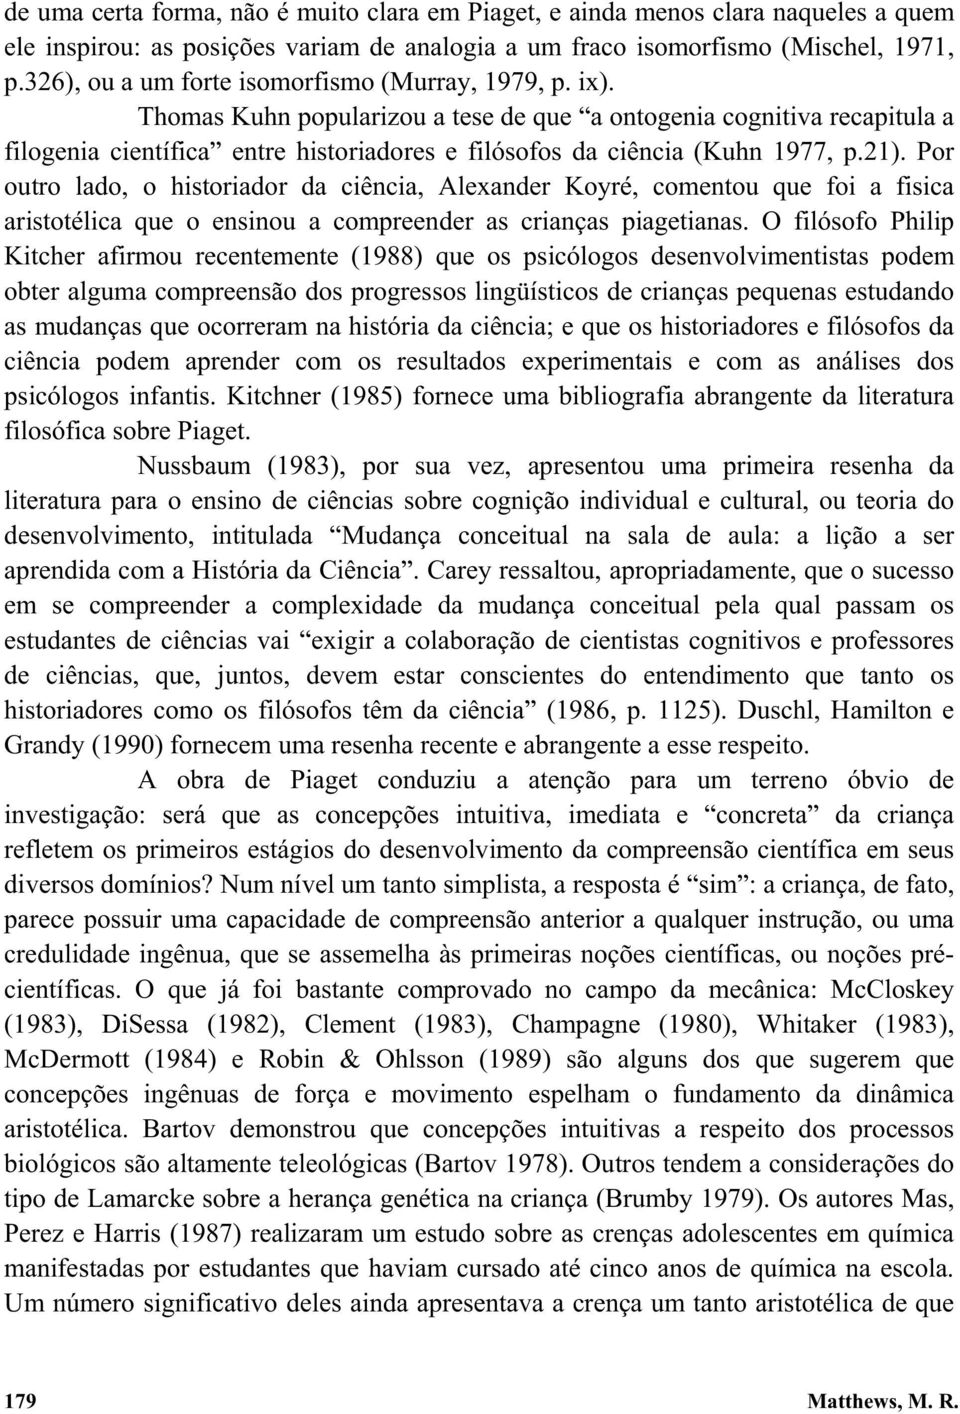 Thomas Kuhn popularizou a tese de que a ontogenia cognitiva recapitula a filogenia científica entre historiadores e filósofos da ciência (Kuhn 1977, p.21).